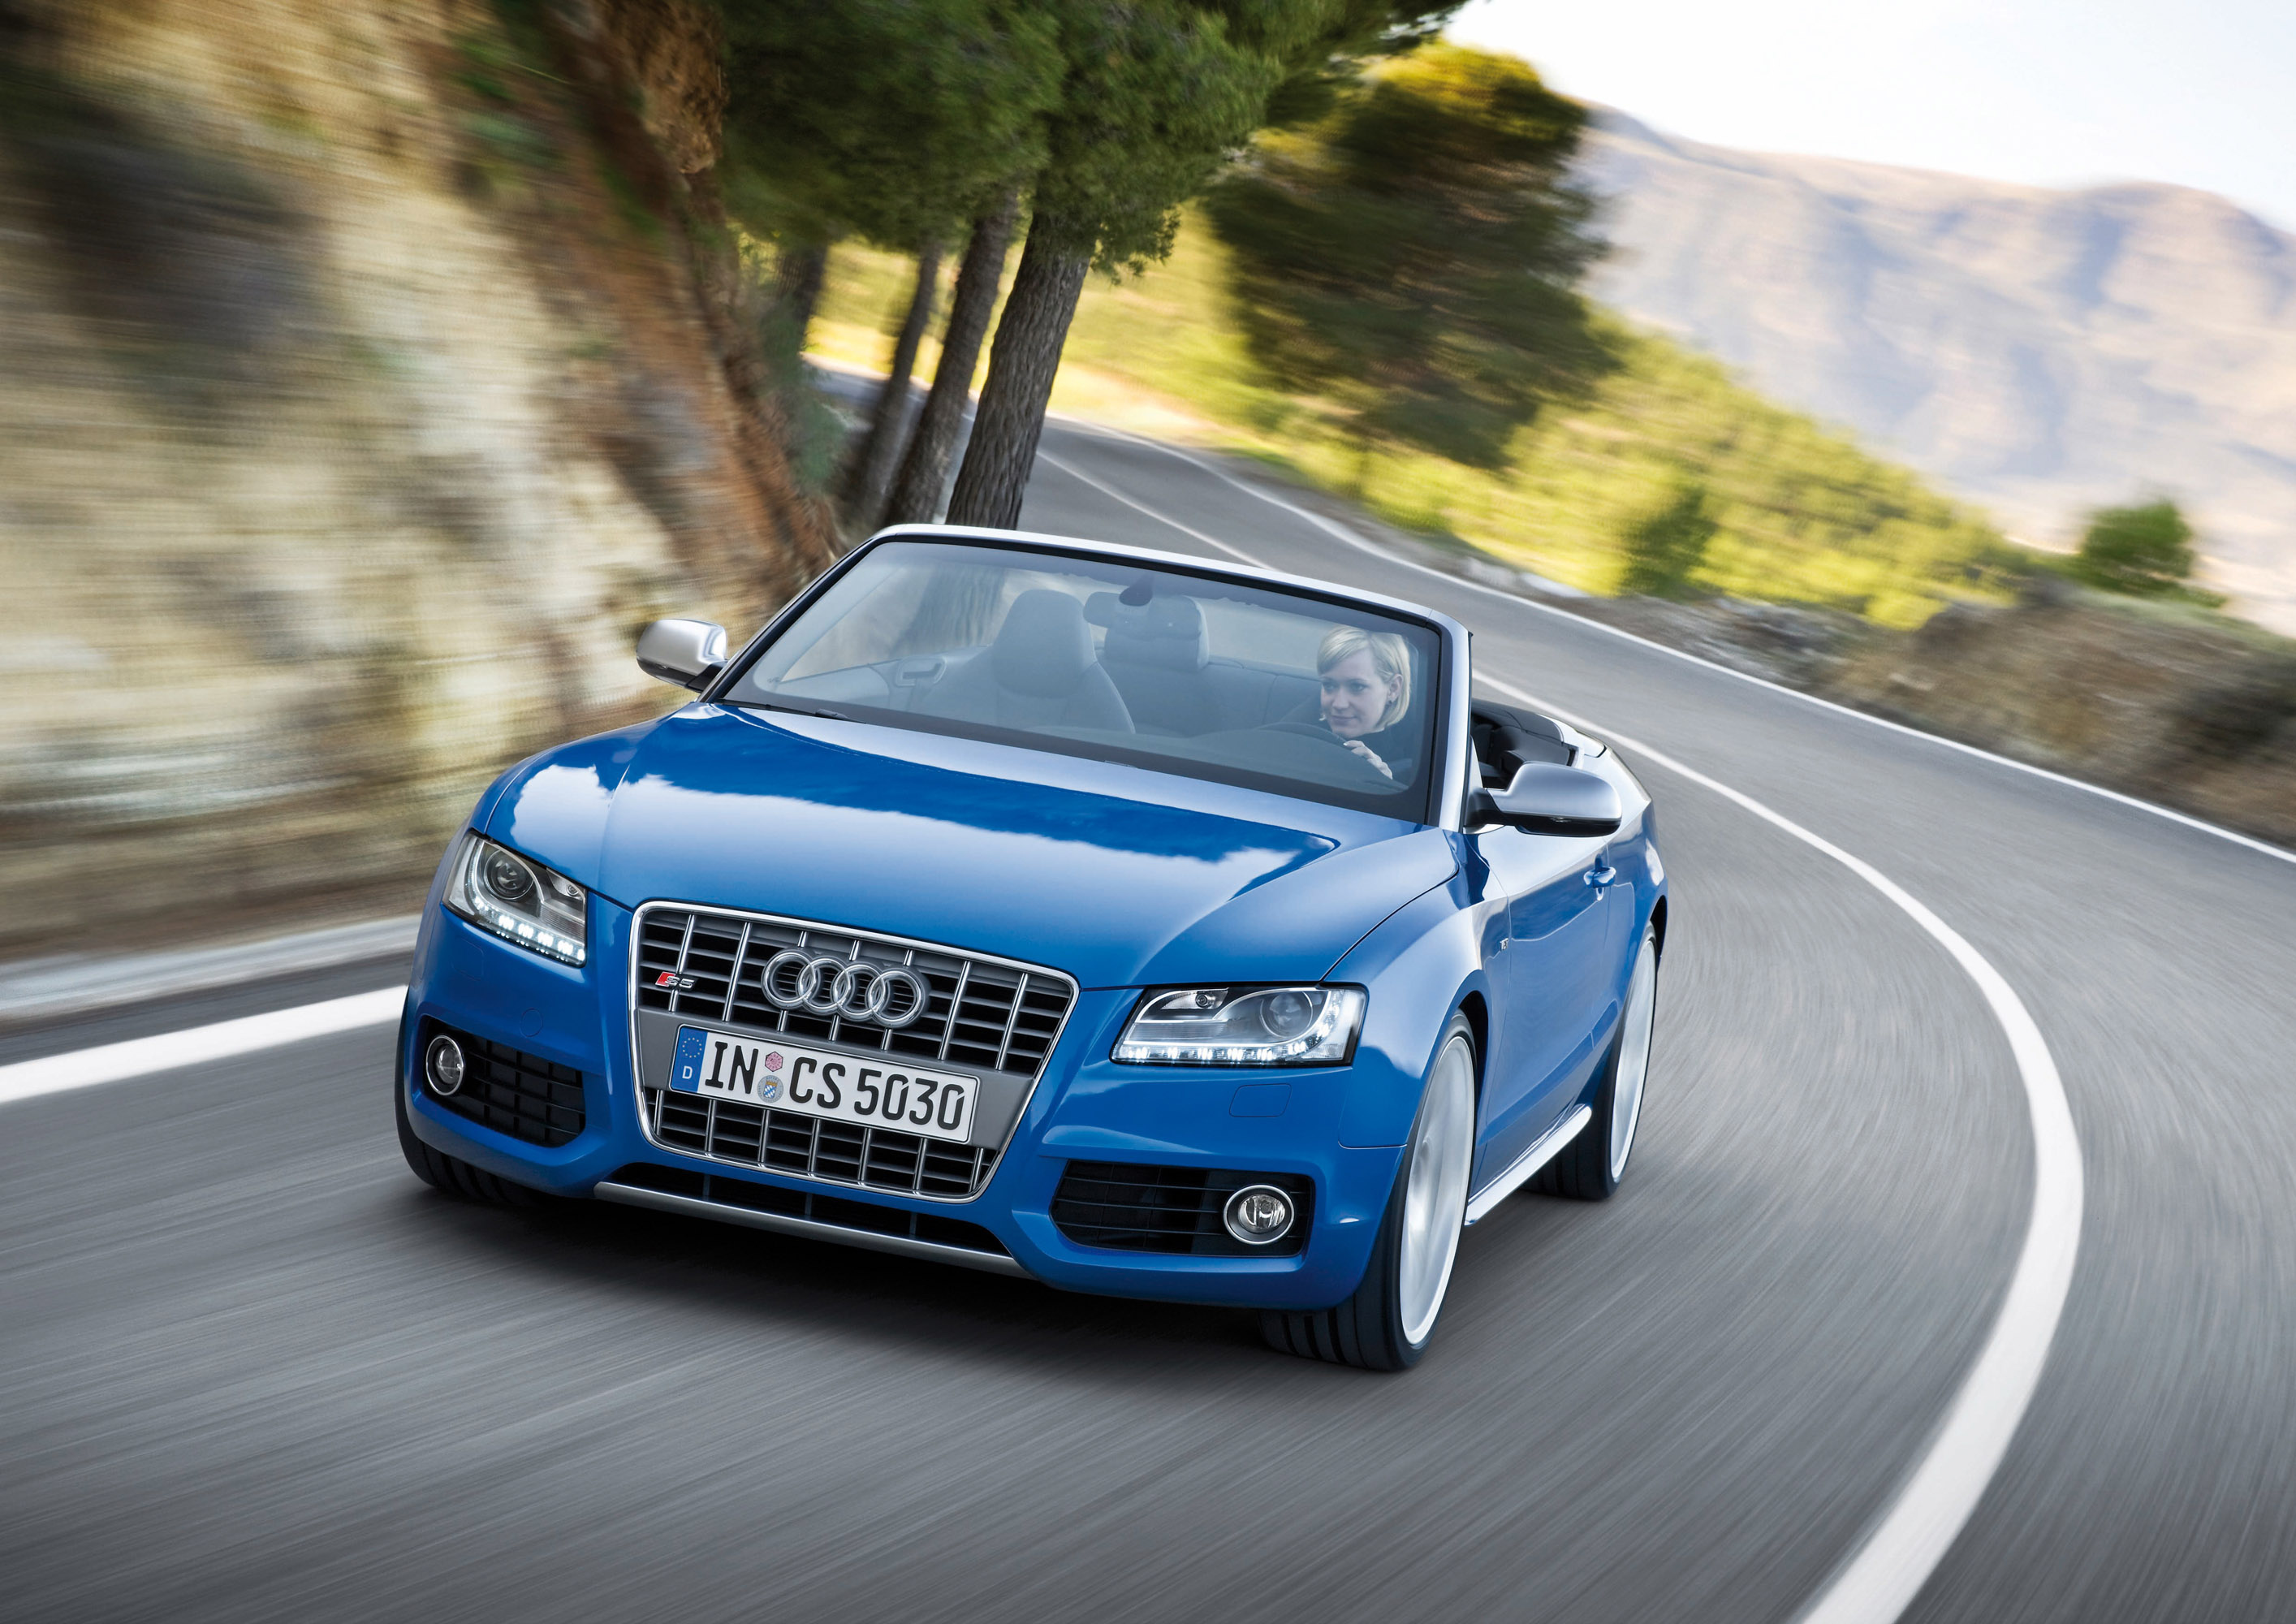 Audi S5, Cabriolet design, HD picture collection, Car enthusiasts' favorite, 2830x2000 HD Desktop